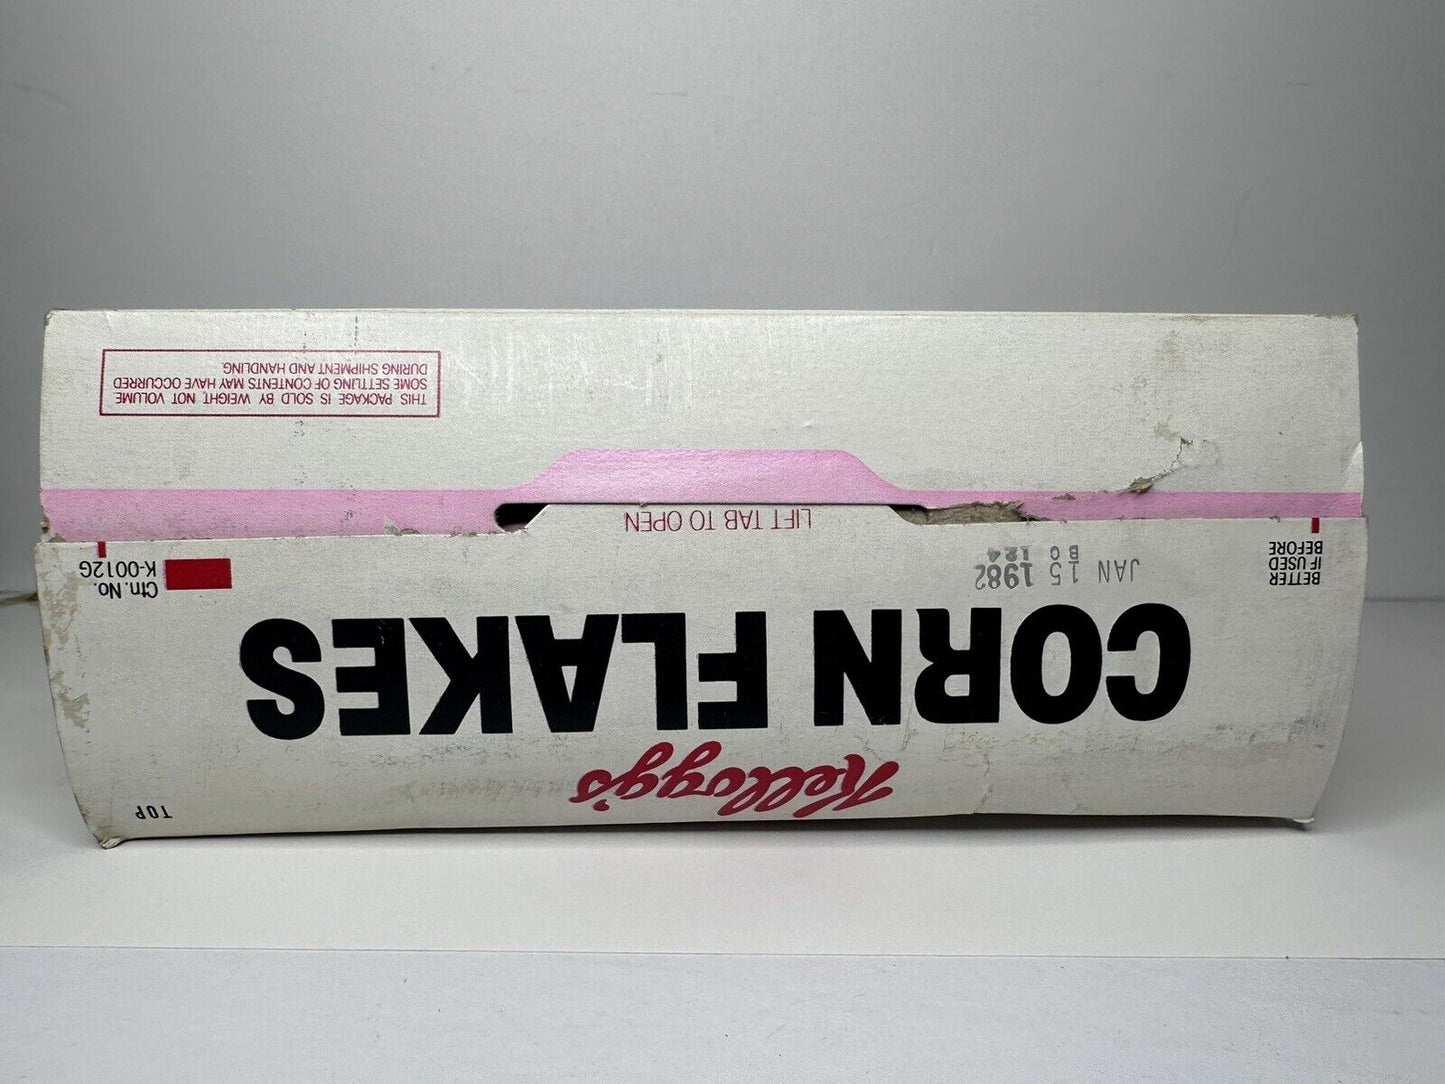 Rare Vintage Kellogg's 75th Anniversary Toasted Corn Flakes Cereal Box with Original Bag (1981) - TreasuTiques